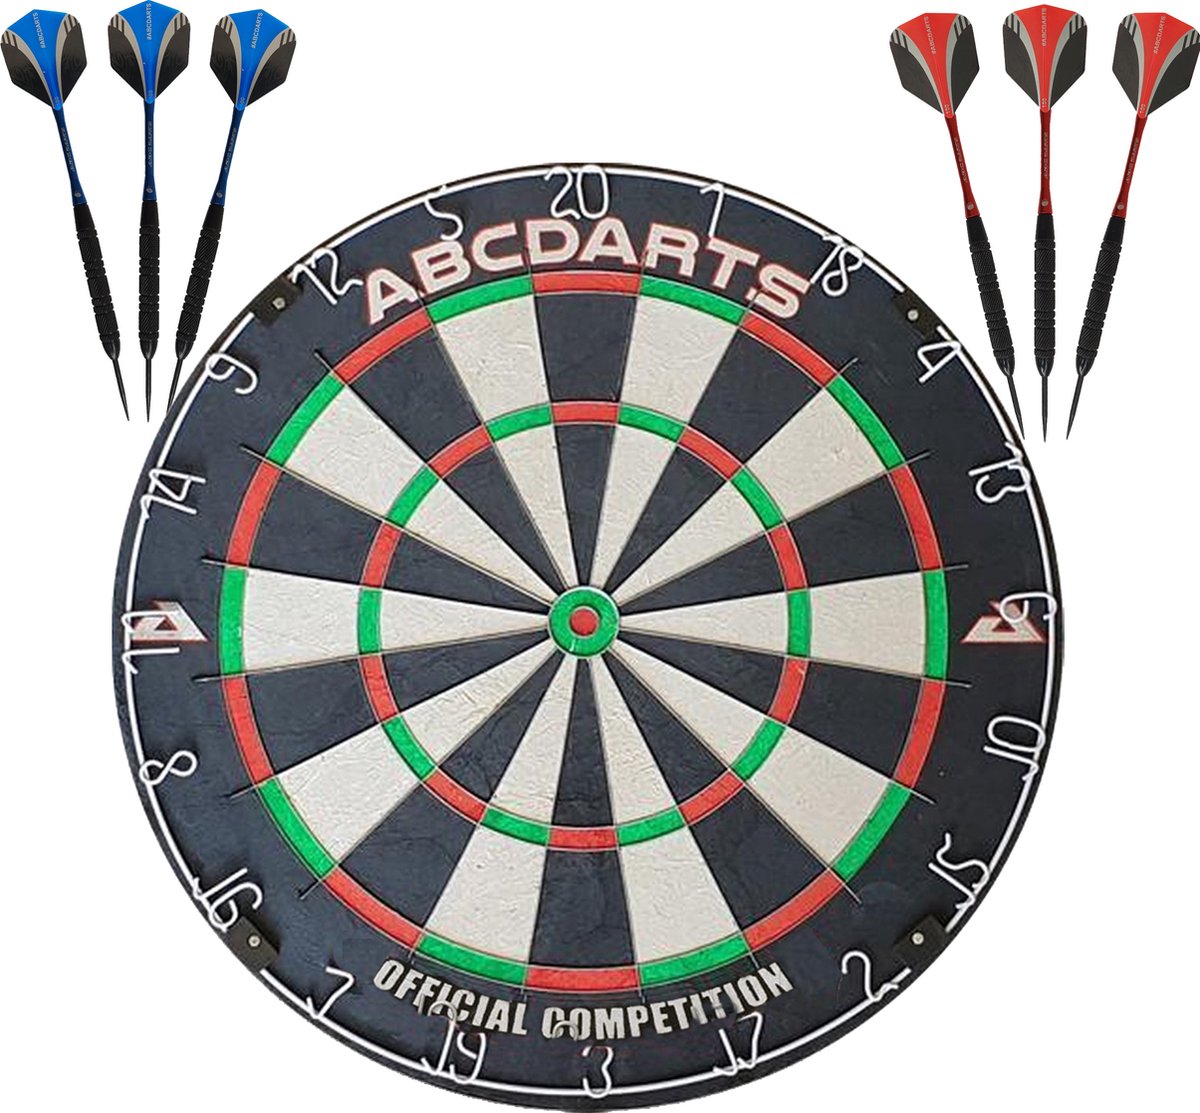 ABC Darts - Dartbord HQ Pro Edition + 2 Sets 23 gram Brass Dartpijlen